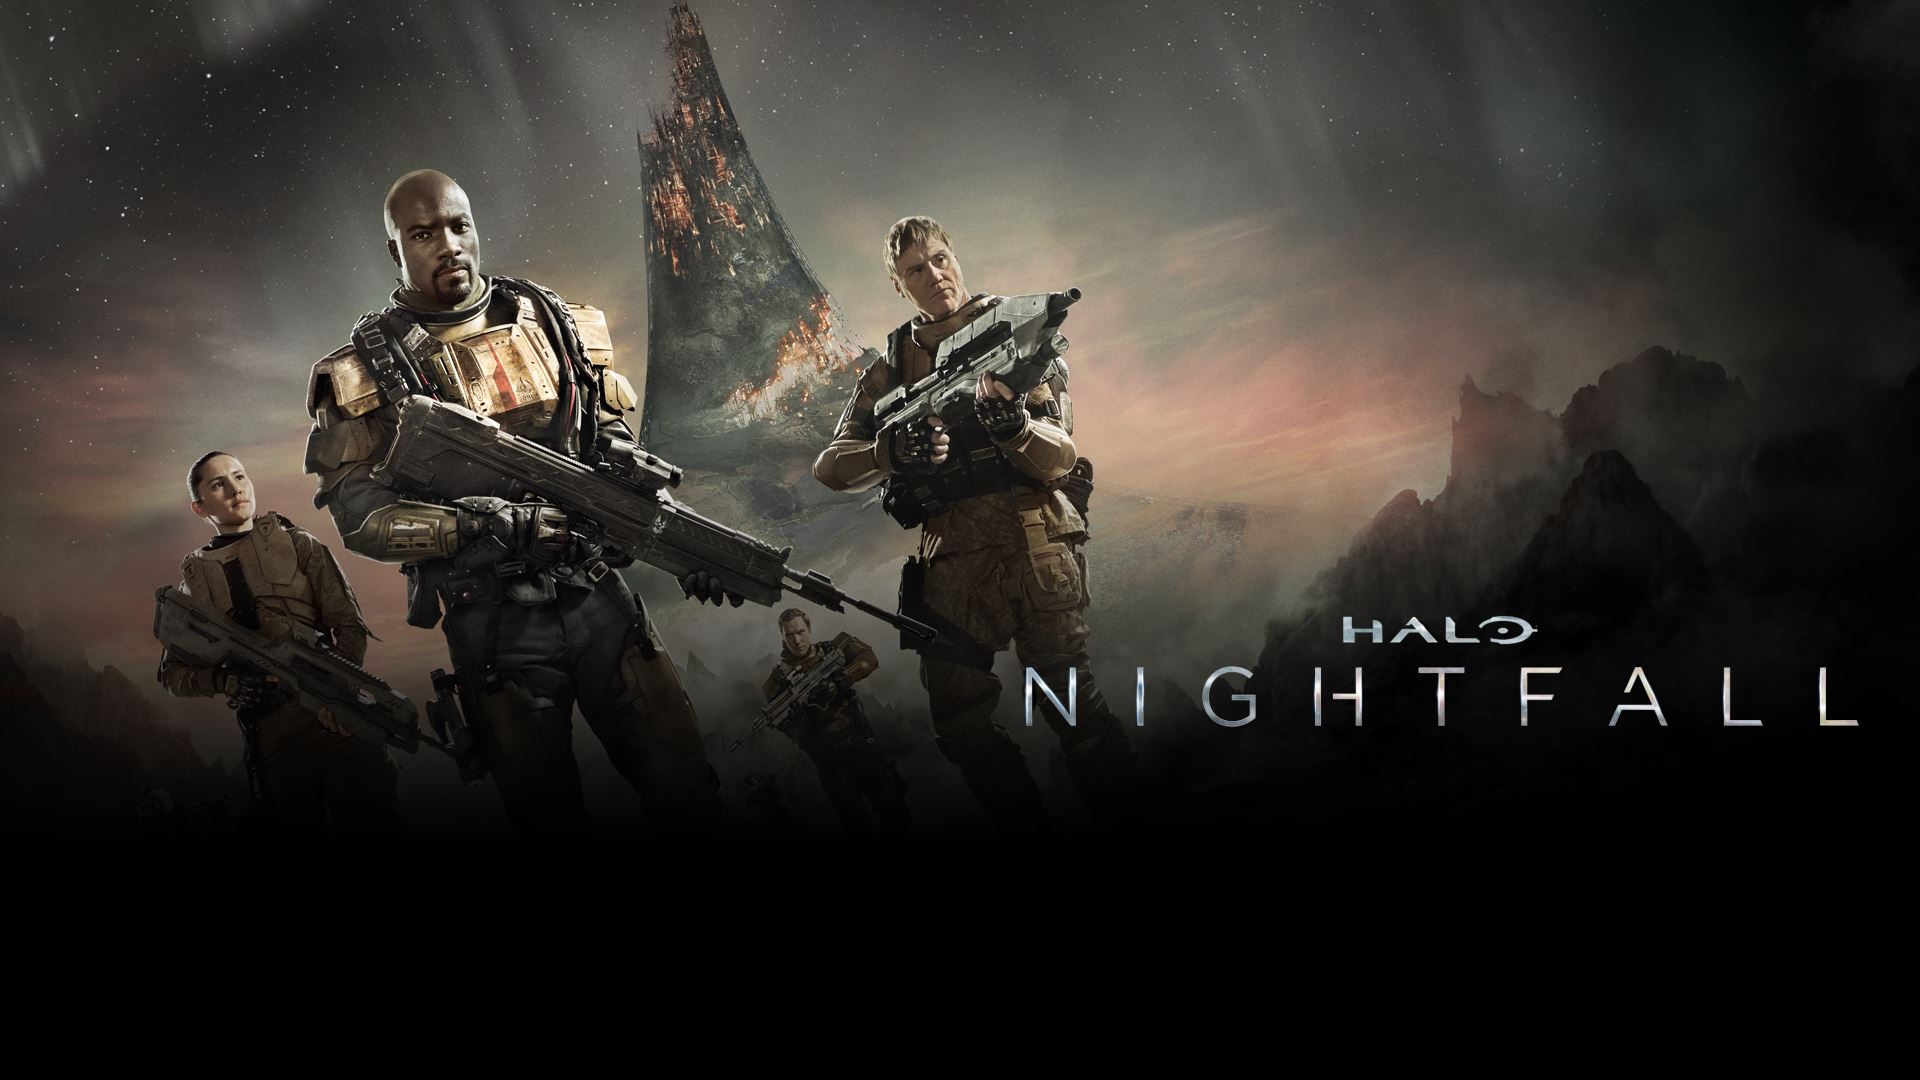 Amazing Halo: Nightfall Pictures & Backgrounds